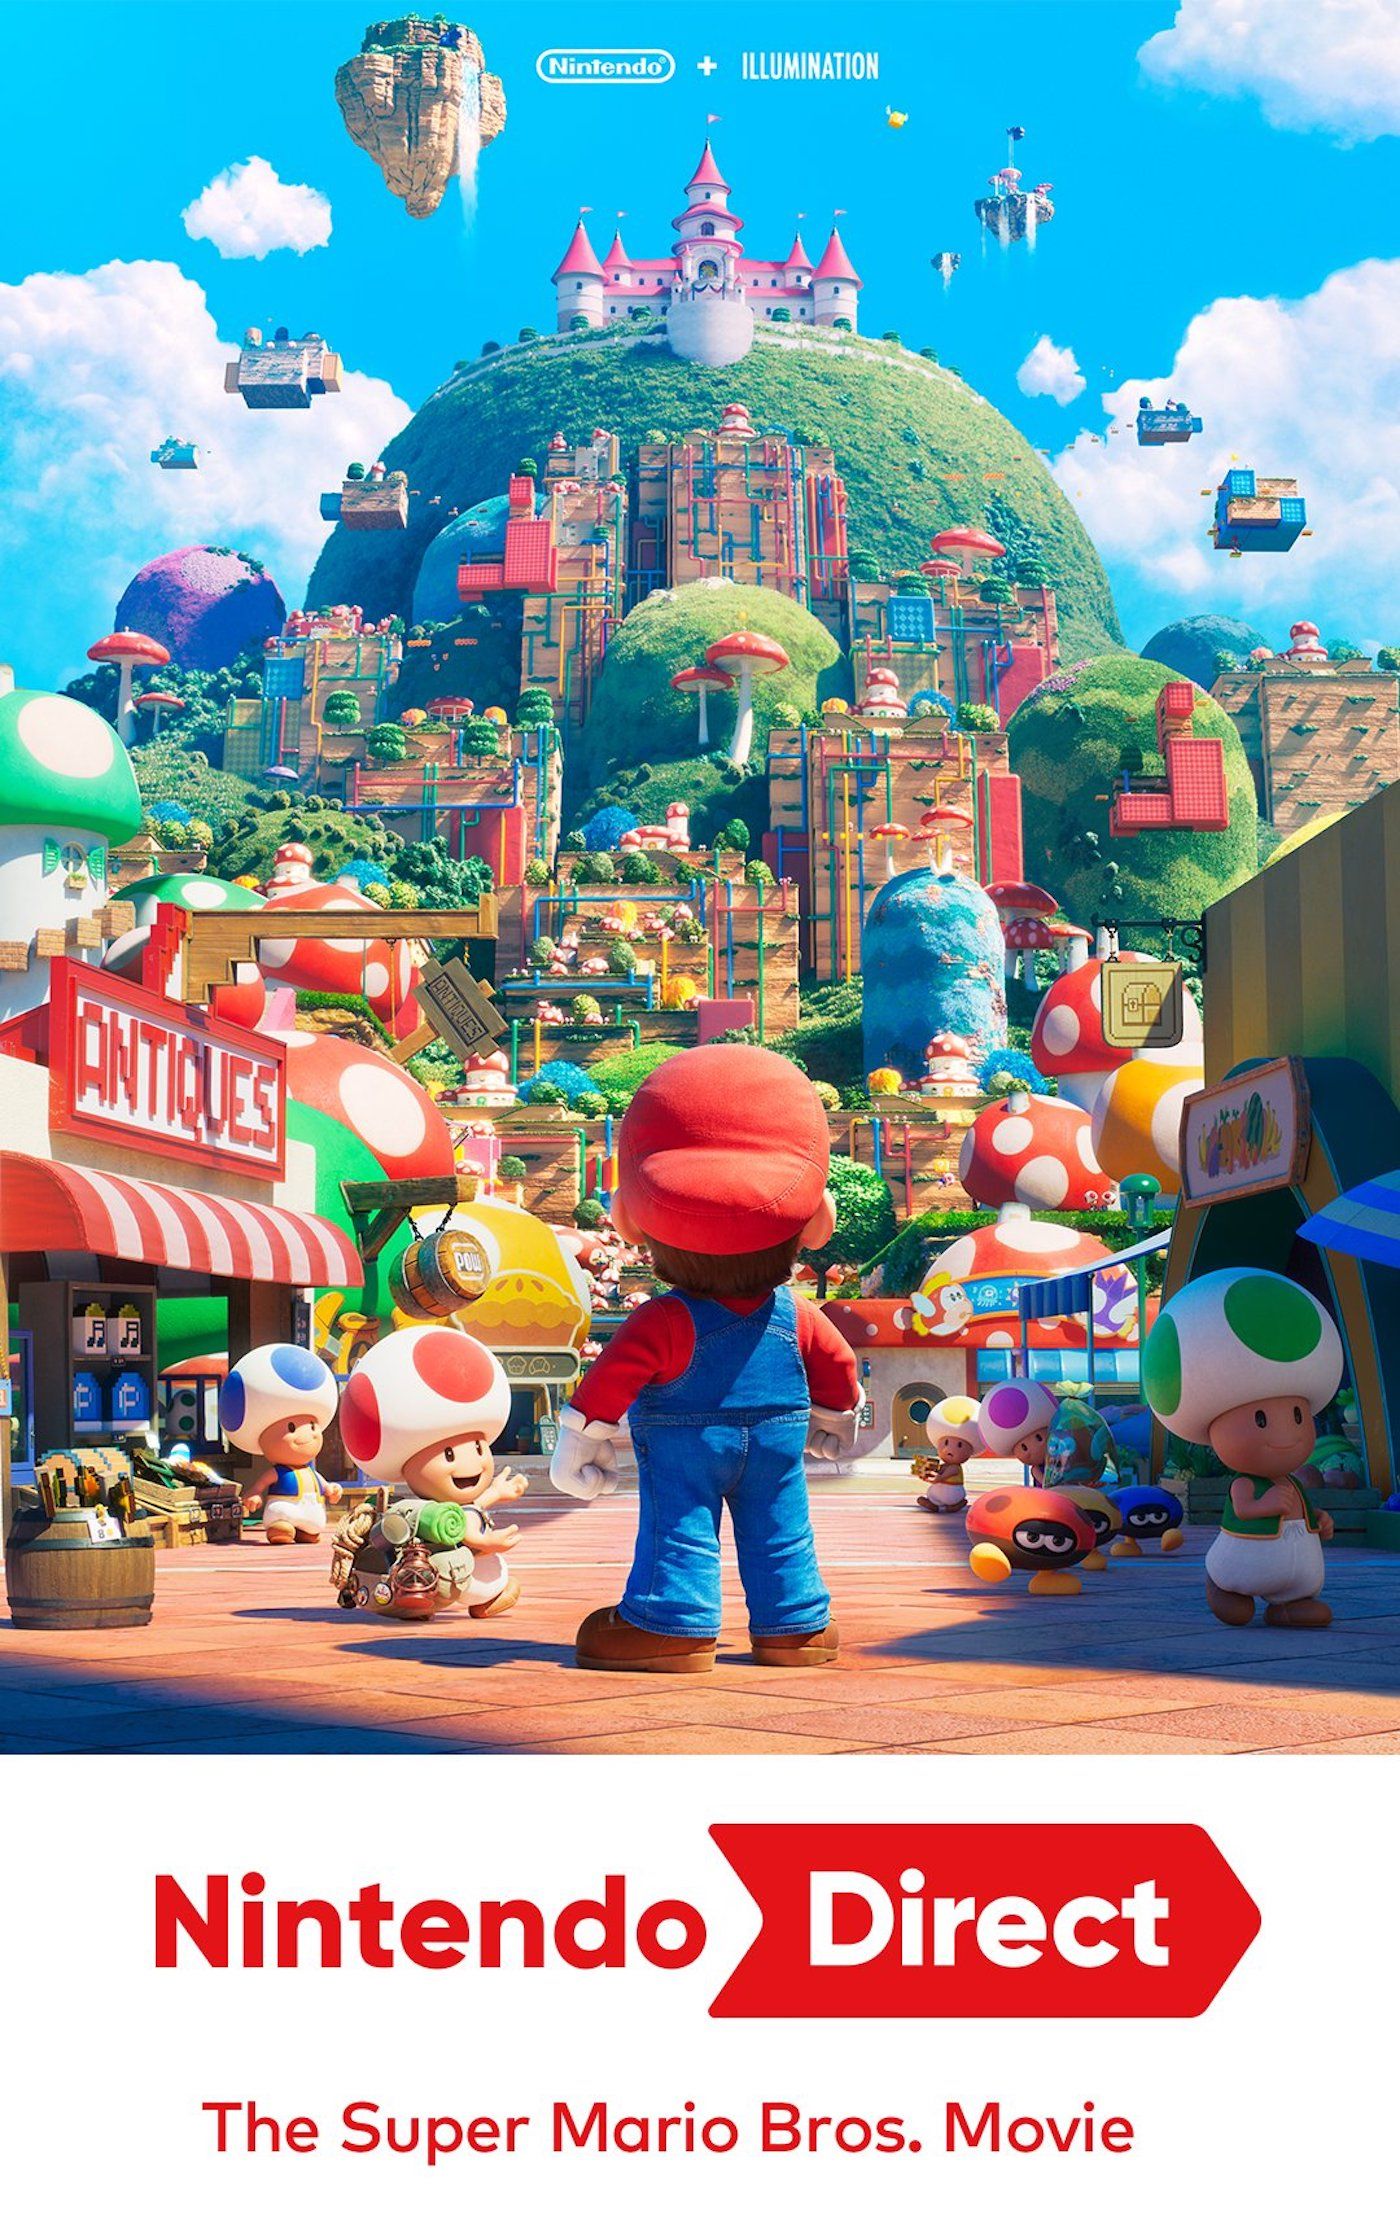 Super Mario Bros. Poster Reveals First Look At Movie’s 3D Mario Design